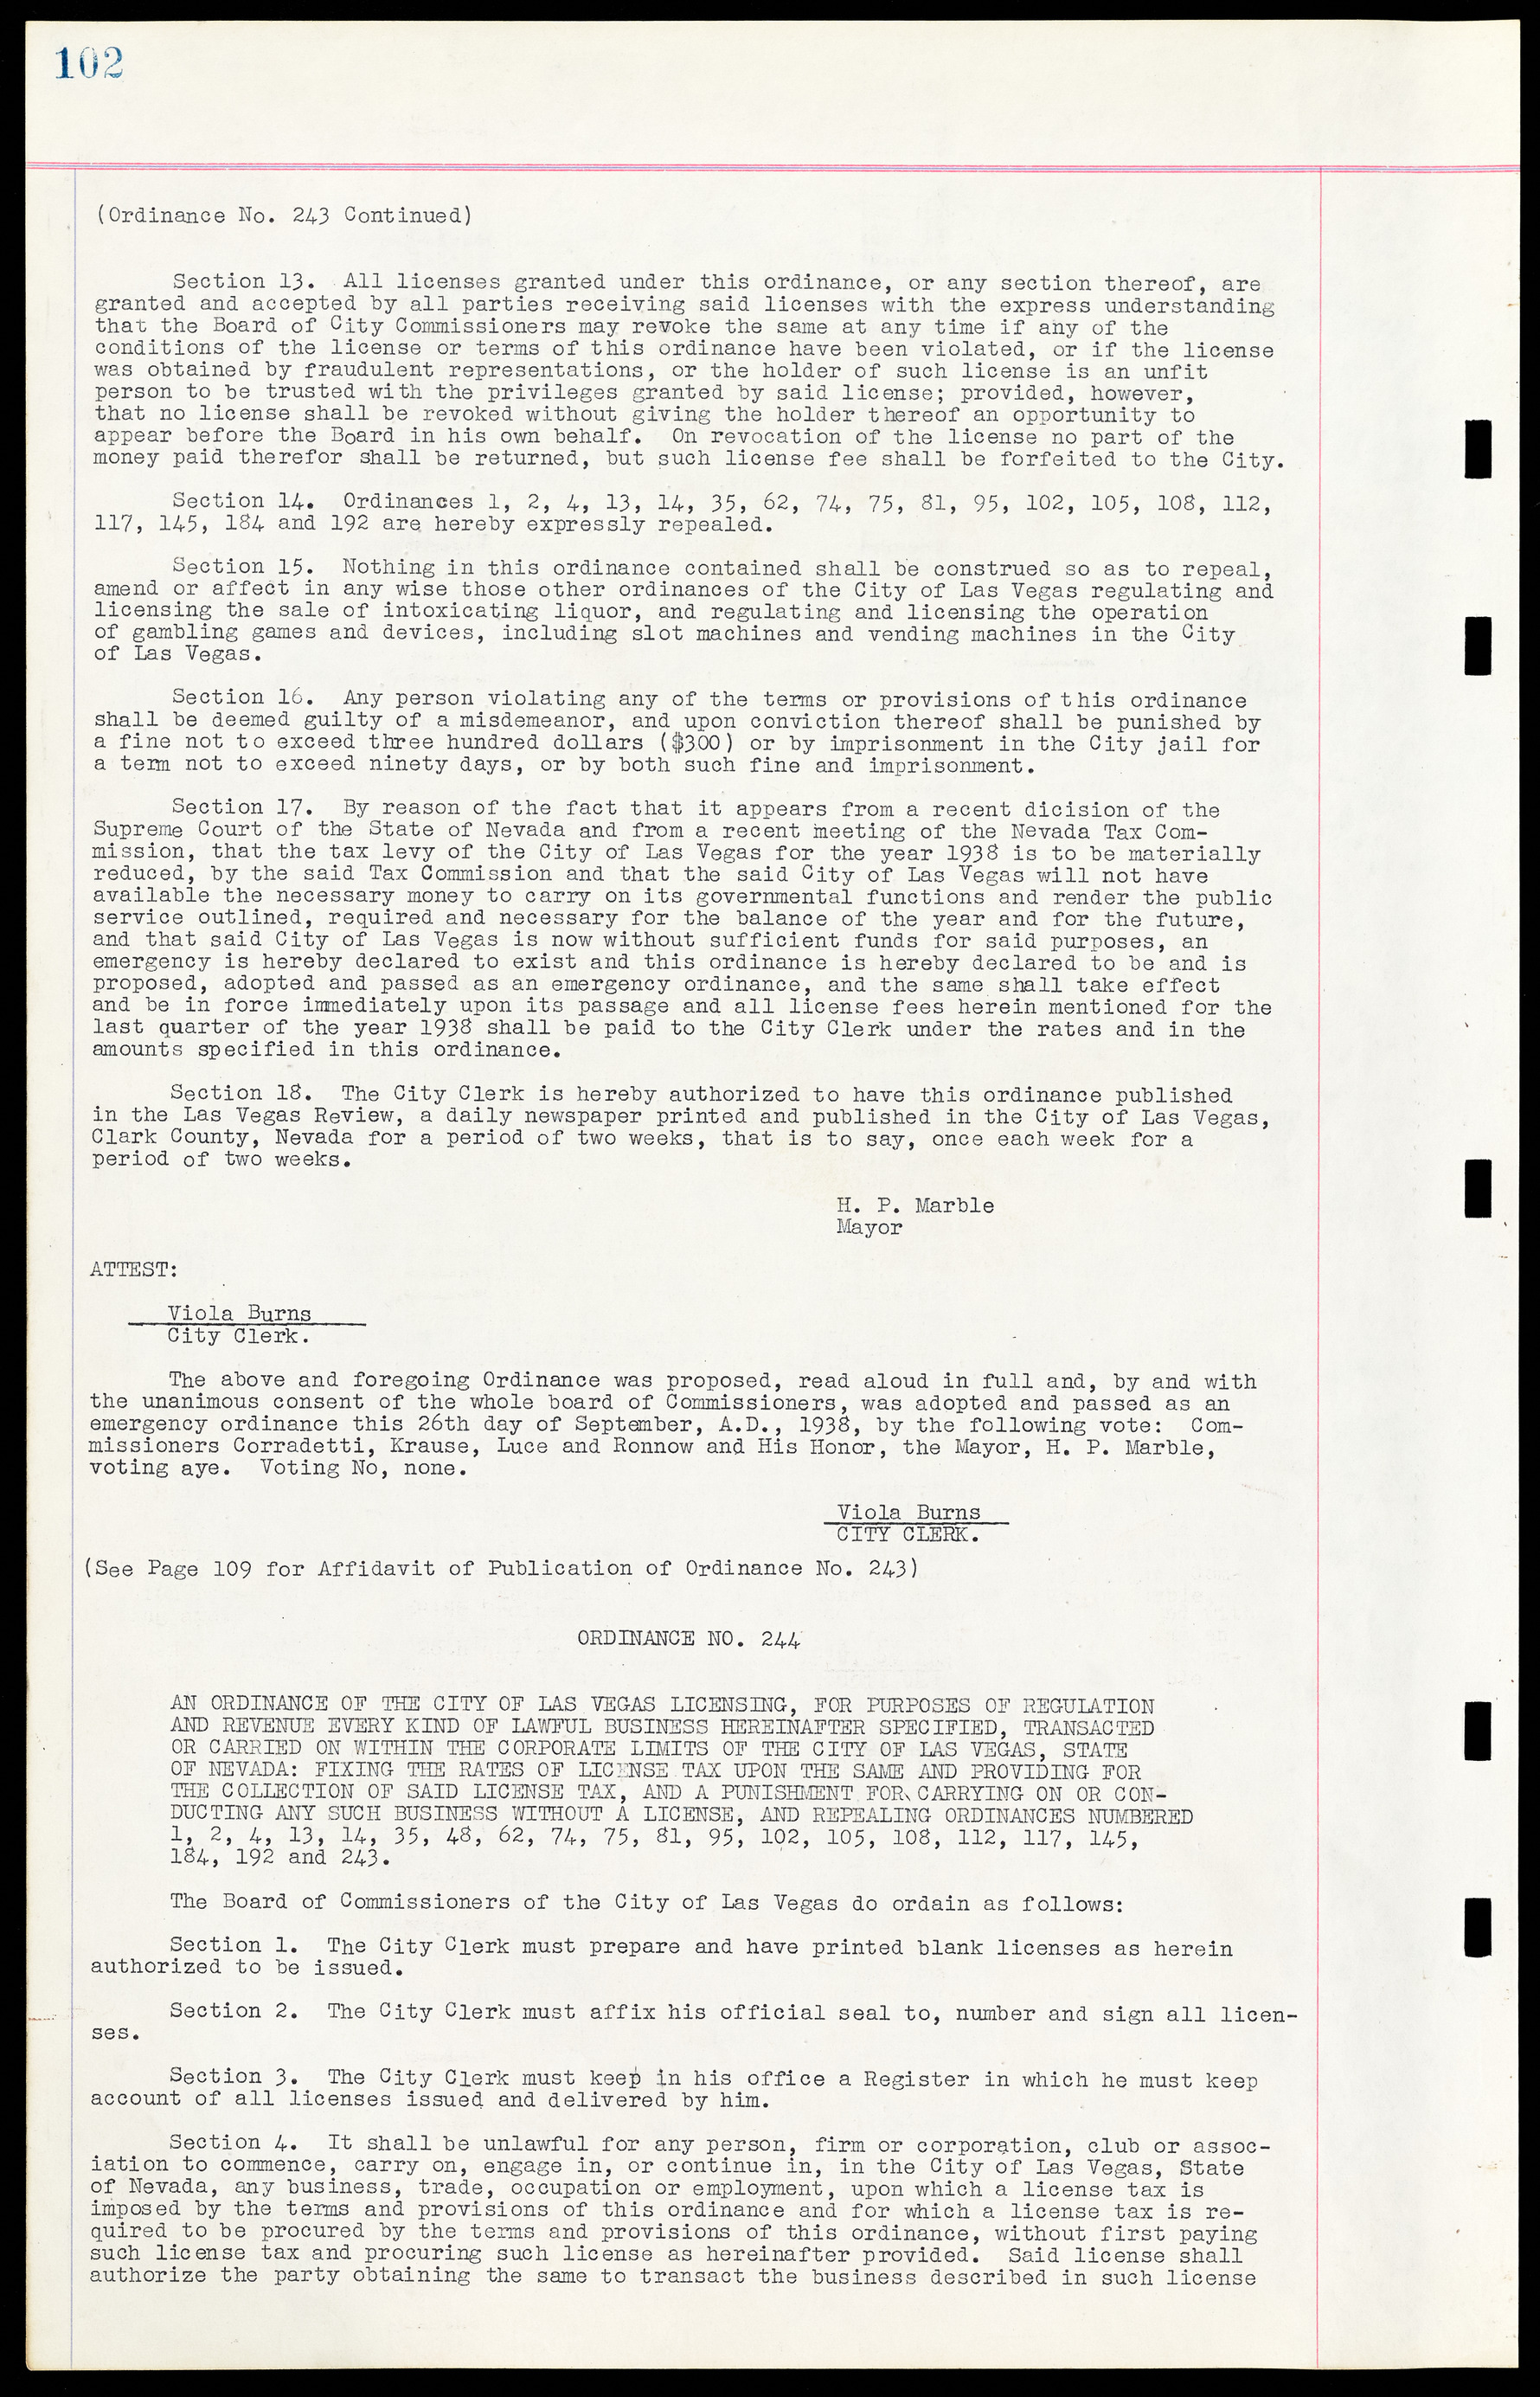 Las Vegas City Ordinances, March 31, 1933 to October 25, 1950, lvc000014-120